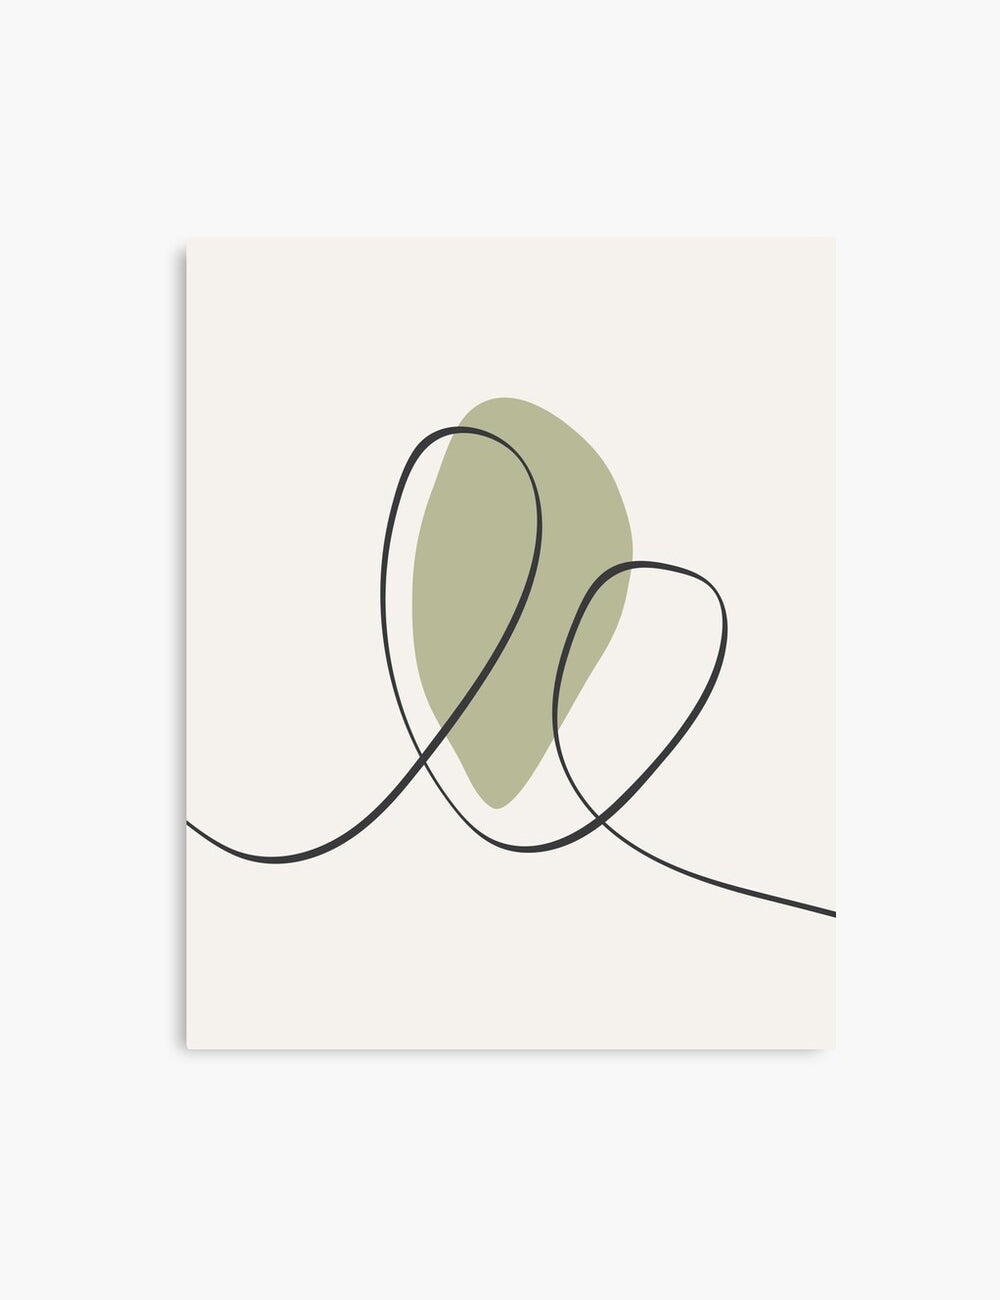 MINIMAL LINE ART. Abstract Heart Shape. Boho Aesthetic. Green. Beige. Black. Printable Wall Art Illustration. - PAPER MOON Art & Design